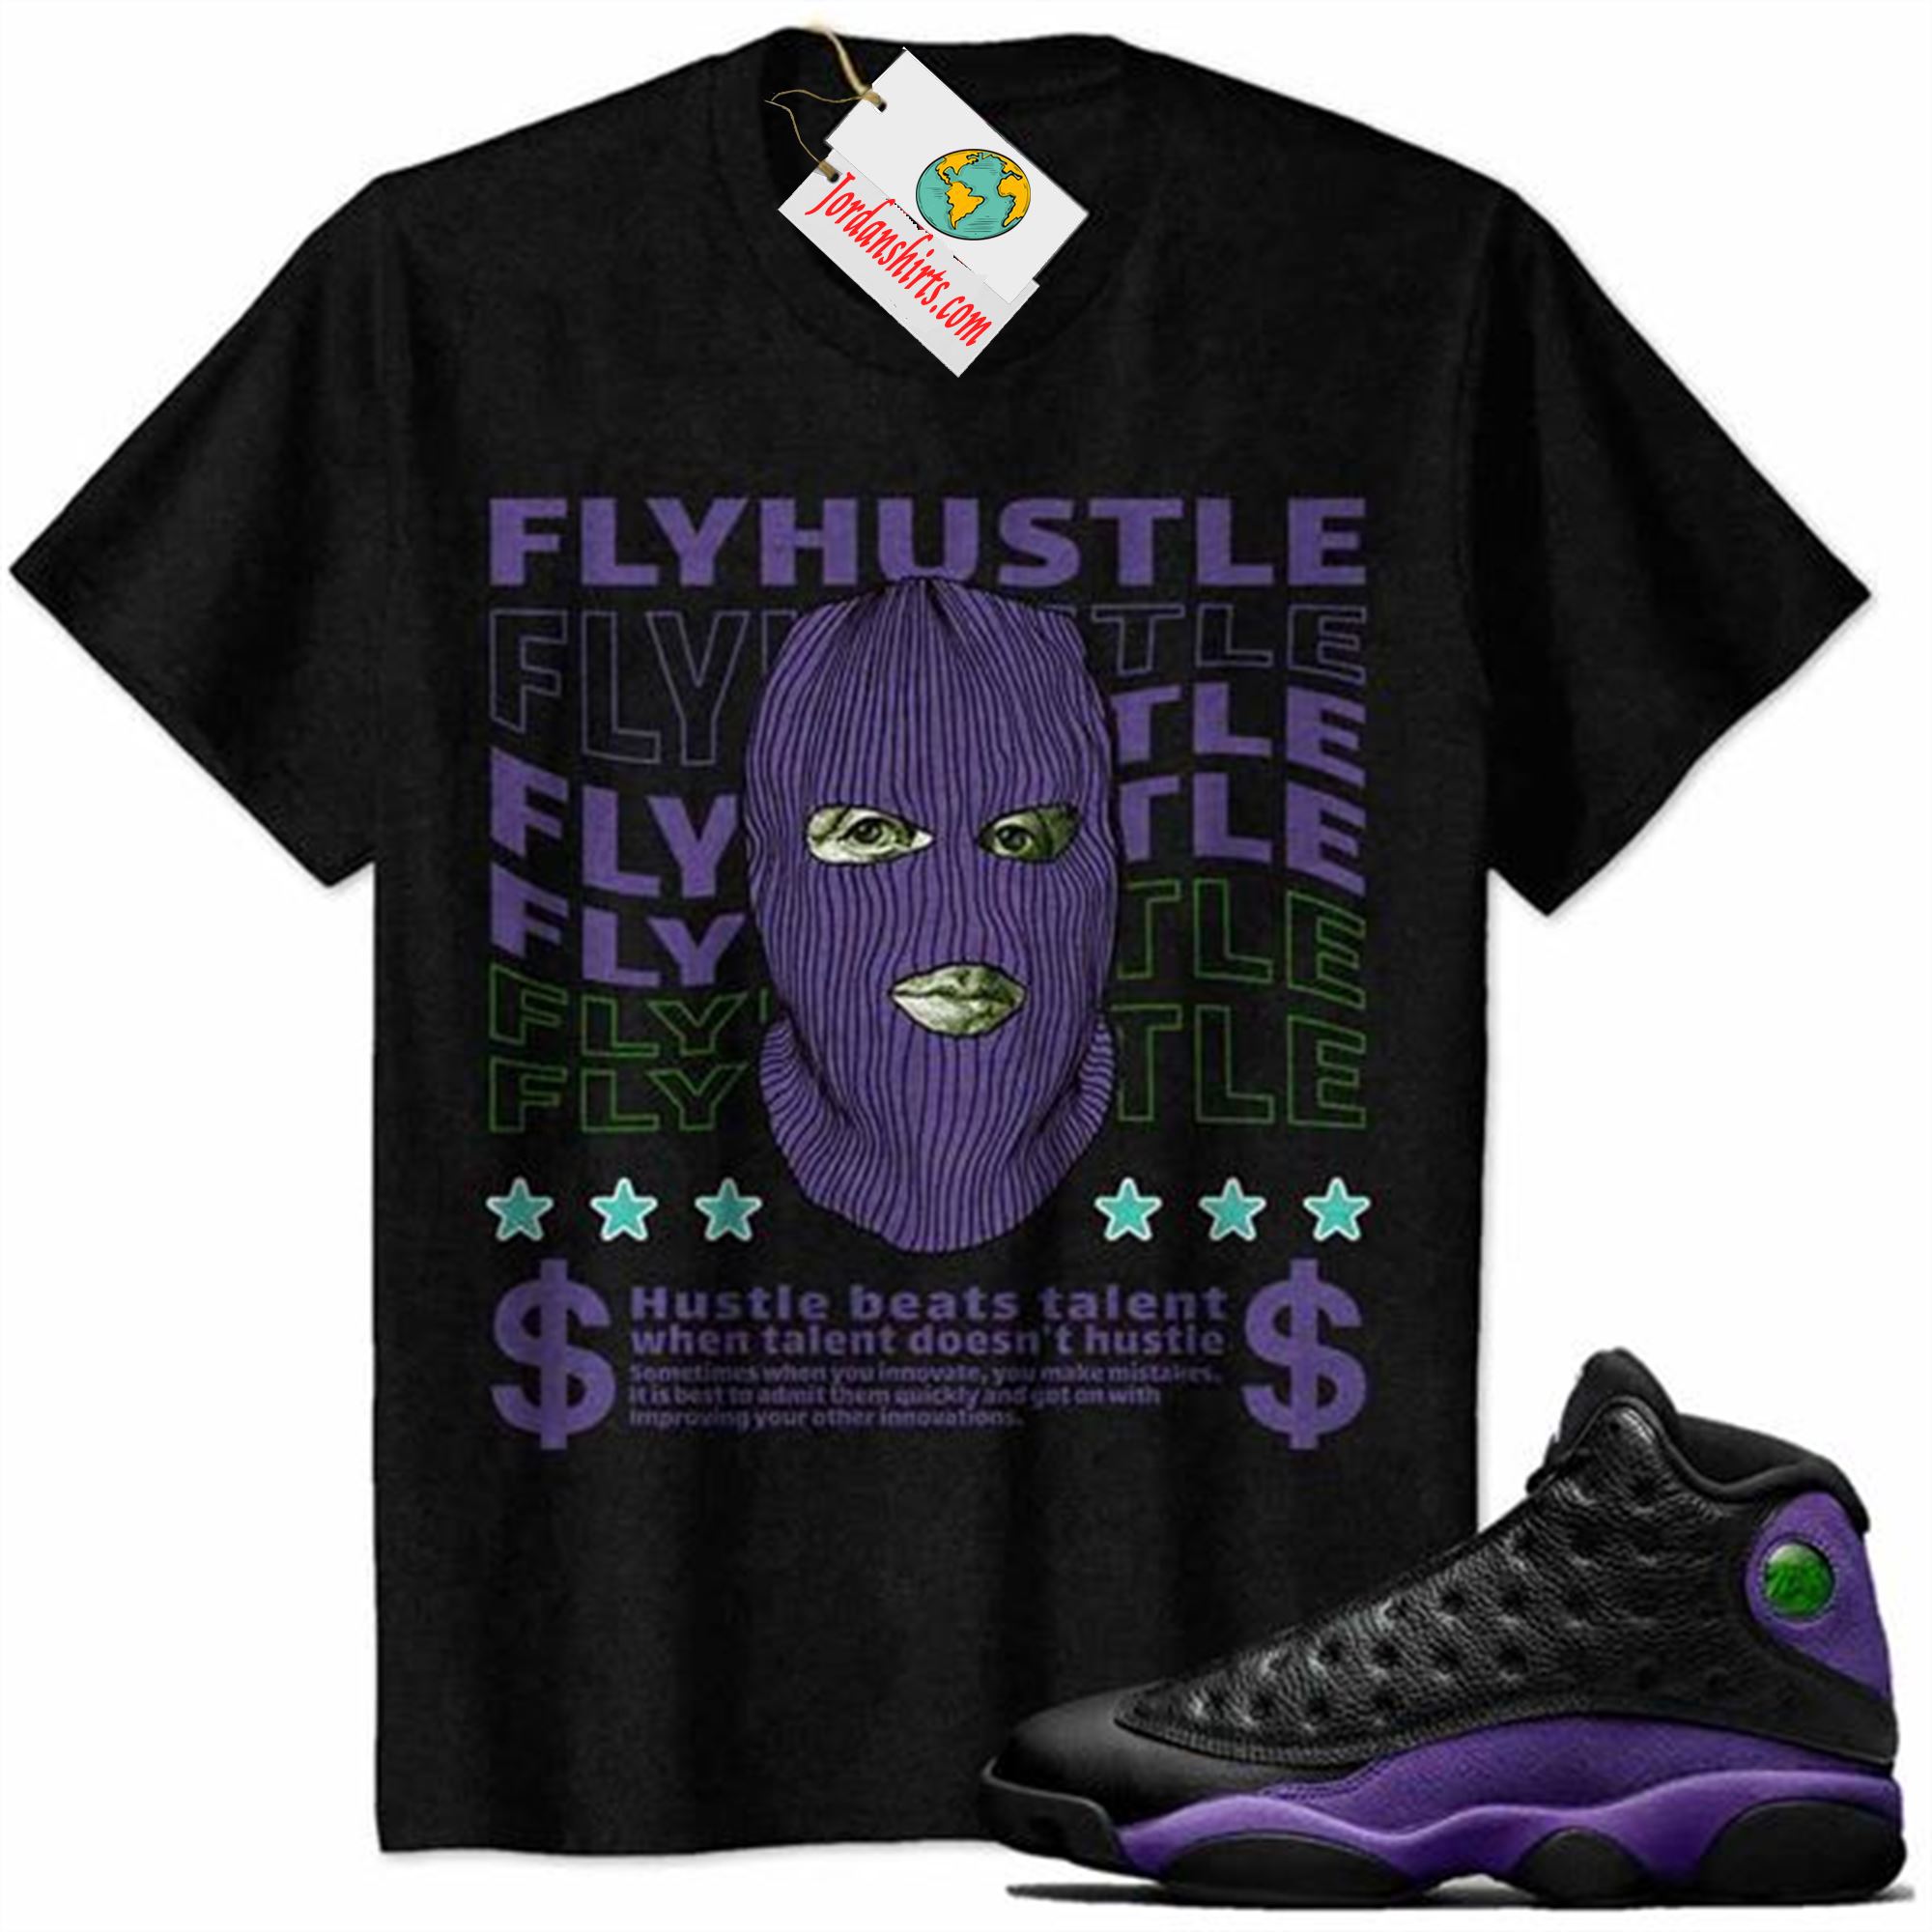 Jordan 13 Shirt, Fly Hustle Benjamin Franklin Ski Mask Black Air Jordan 13 Court Purple 13s Plus Size Up To 5xl